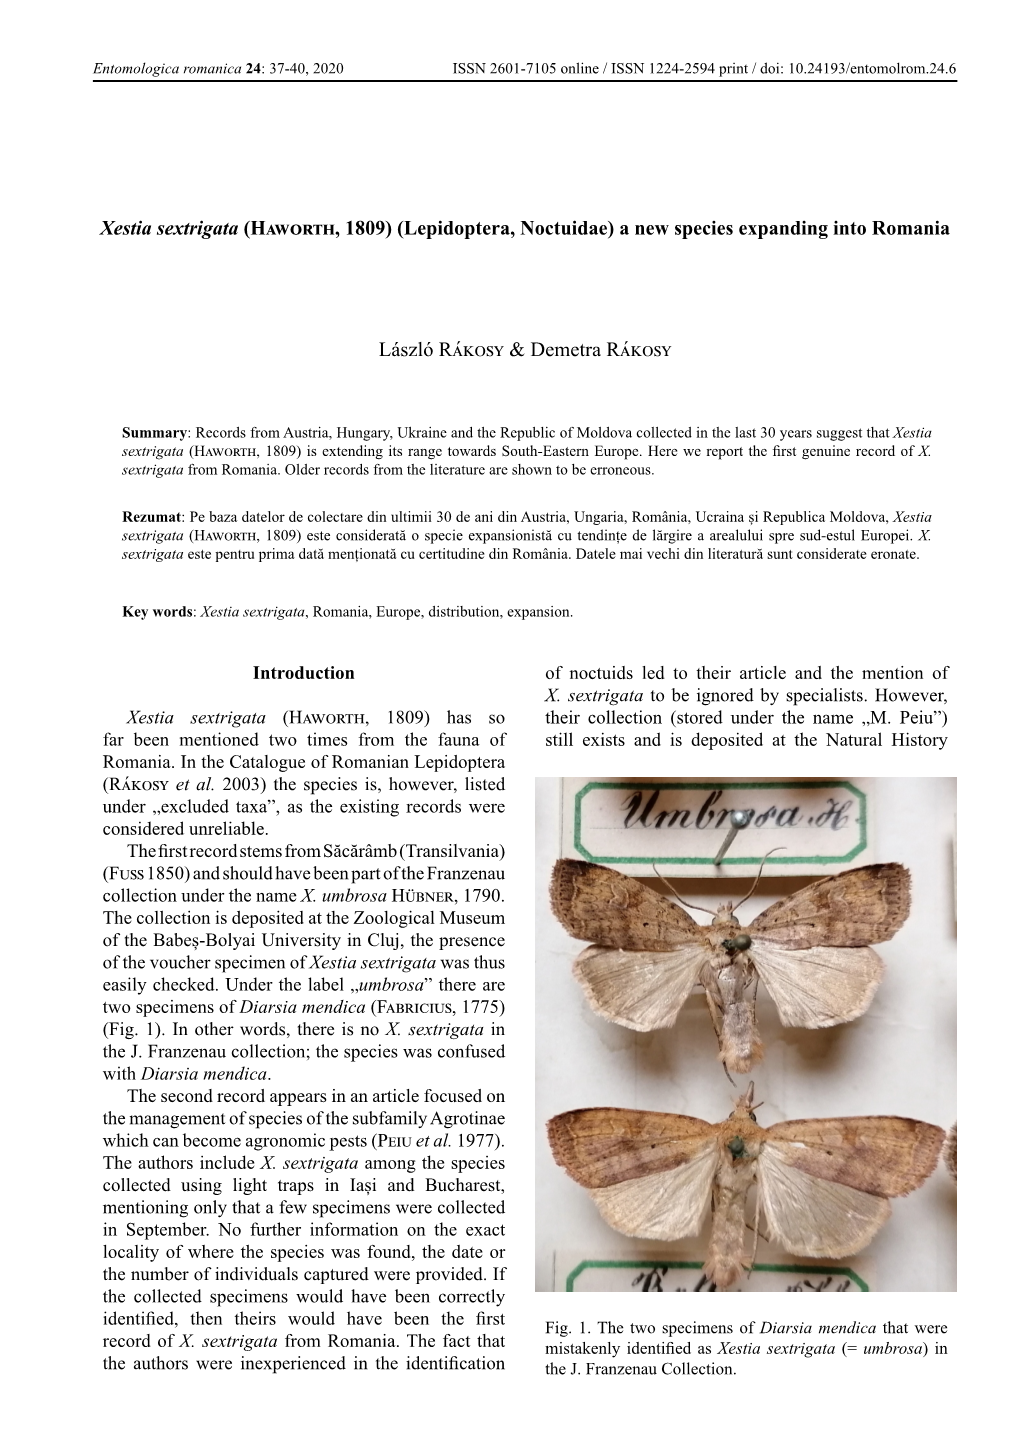 Xestia Sextrigata (Haworth, 1809) (Lepidoptera, Noctuidae) a New Species Expanding Into Romania